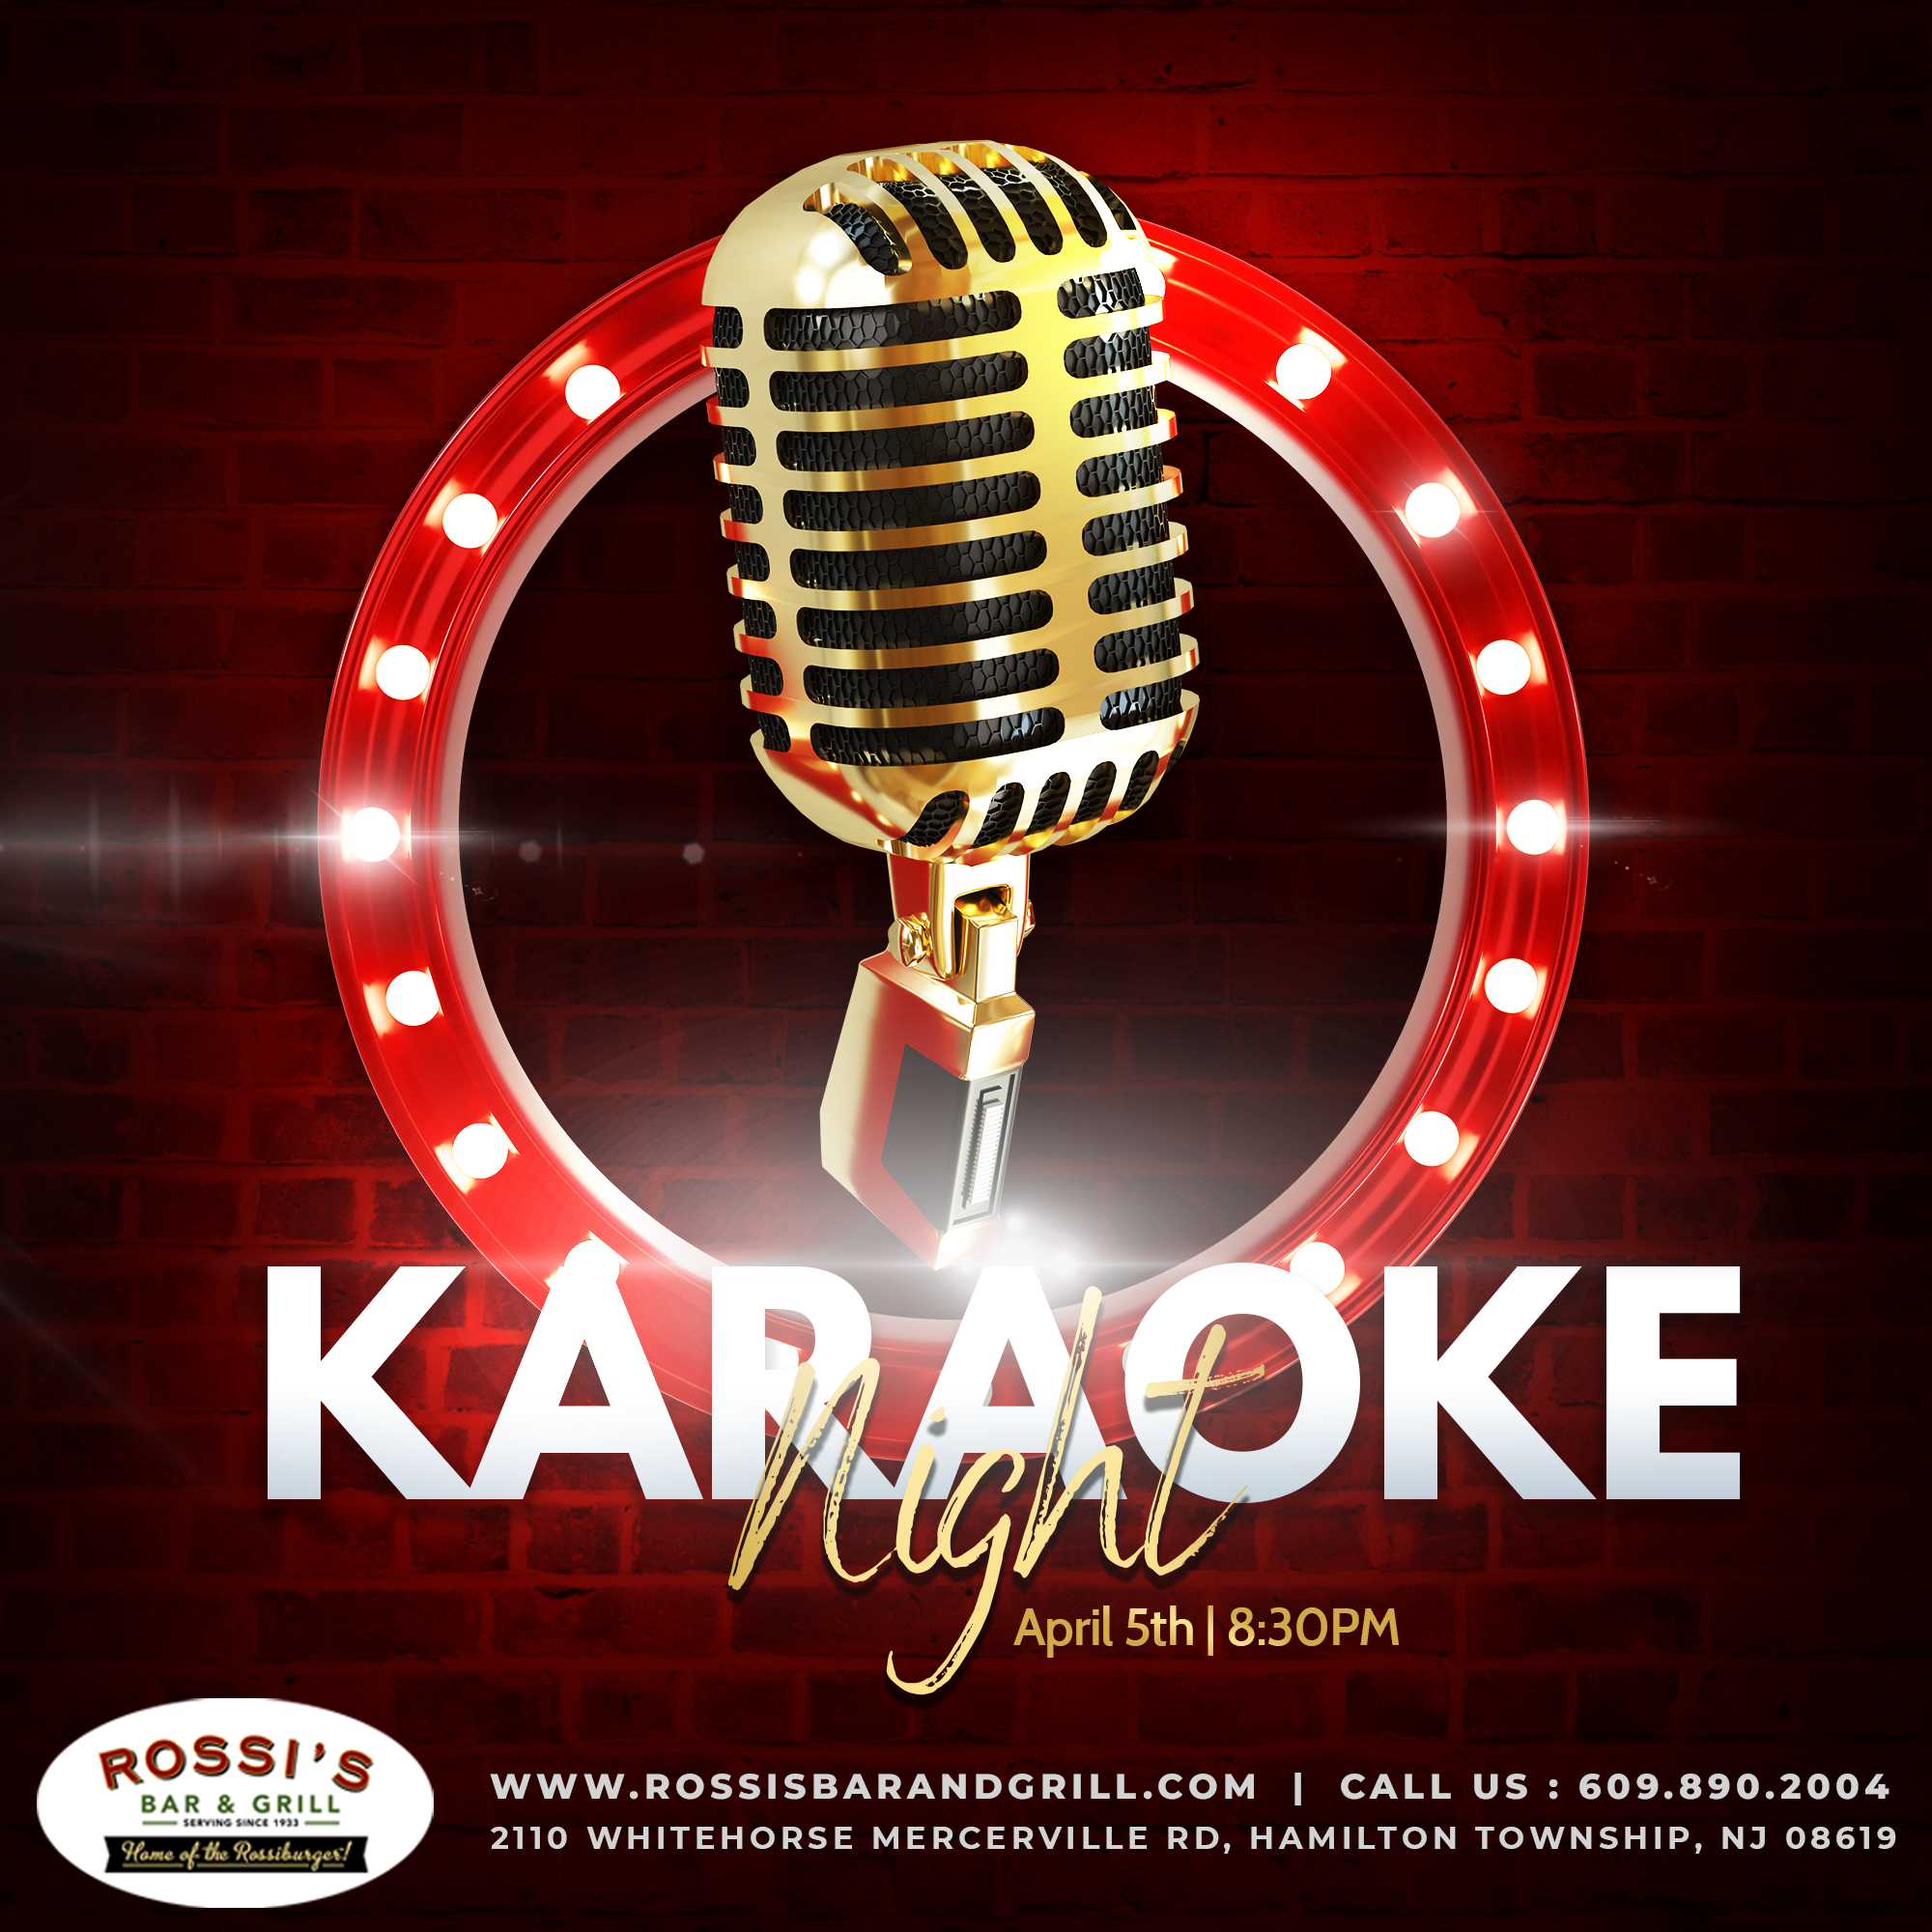 Karaoke Night at Rossi bar and grill nj